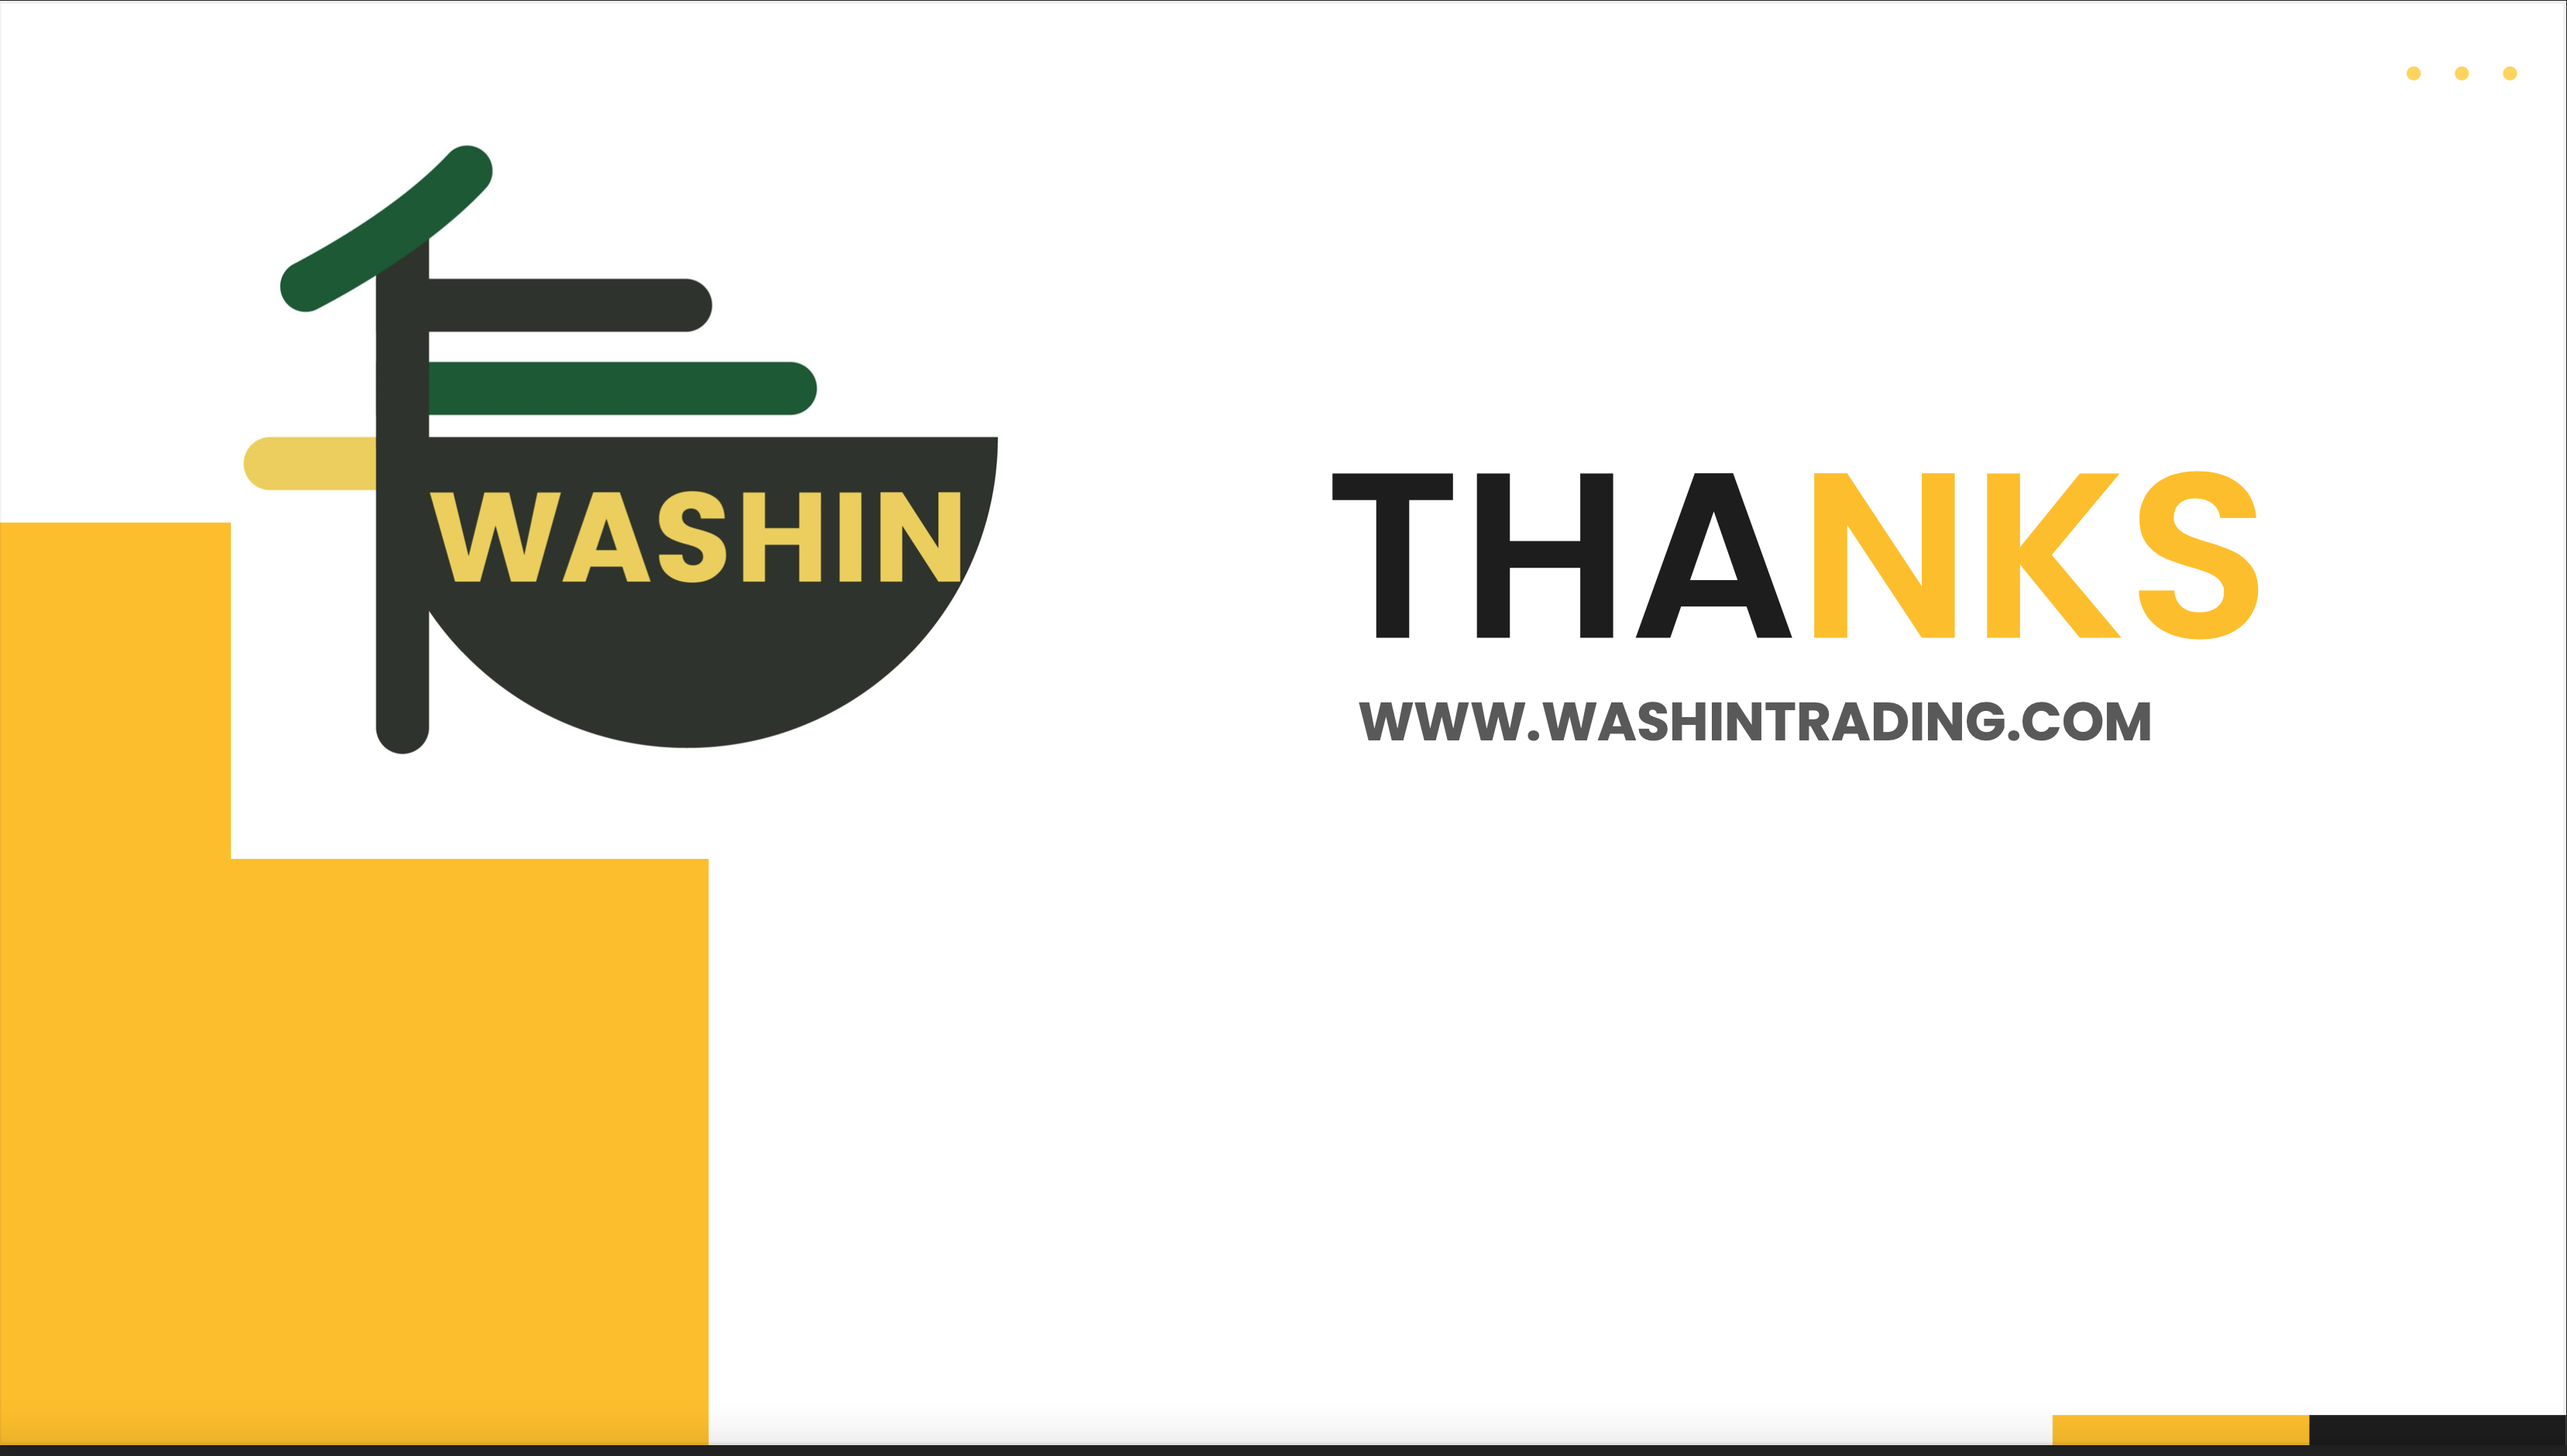 thank you page washin trading company profile